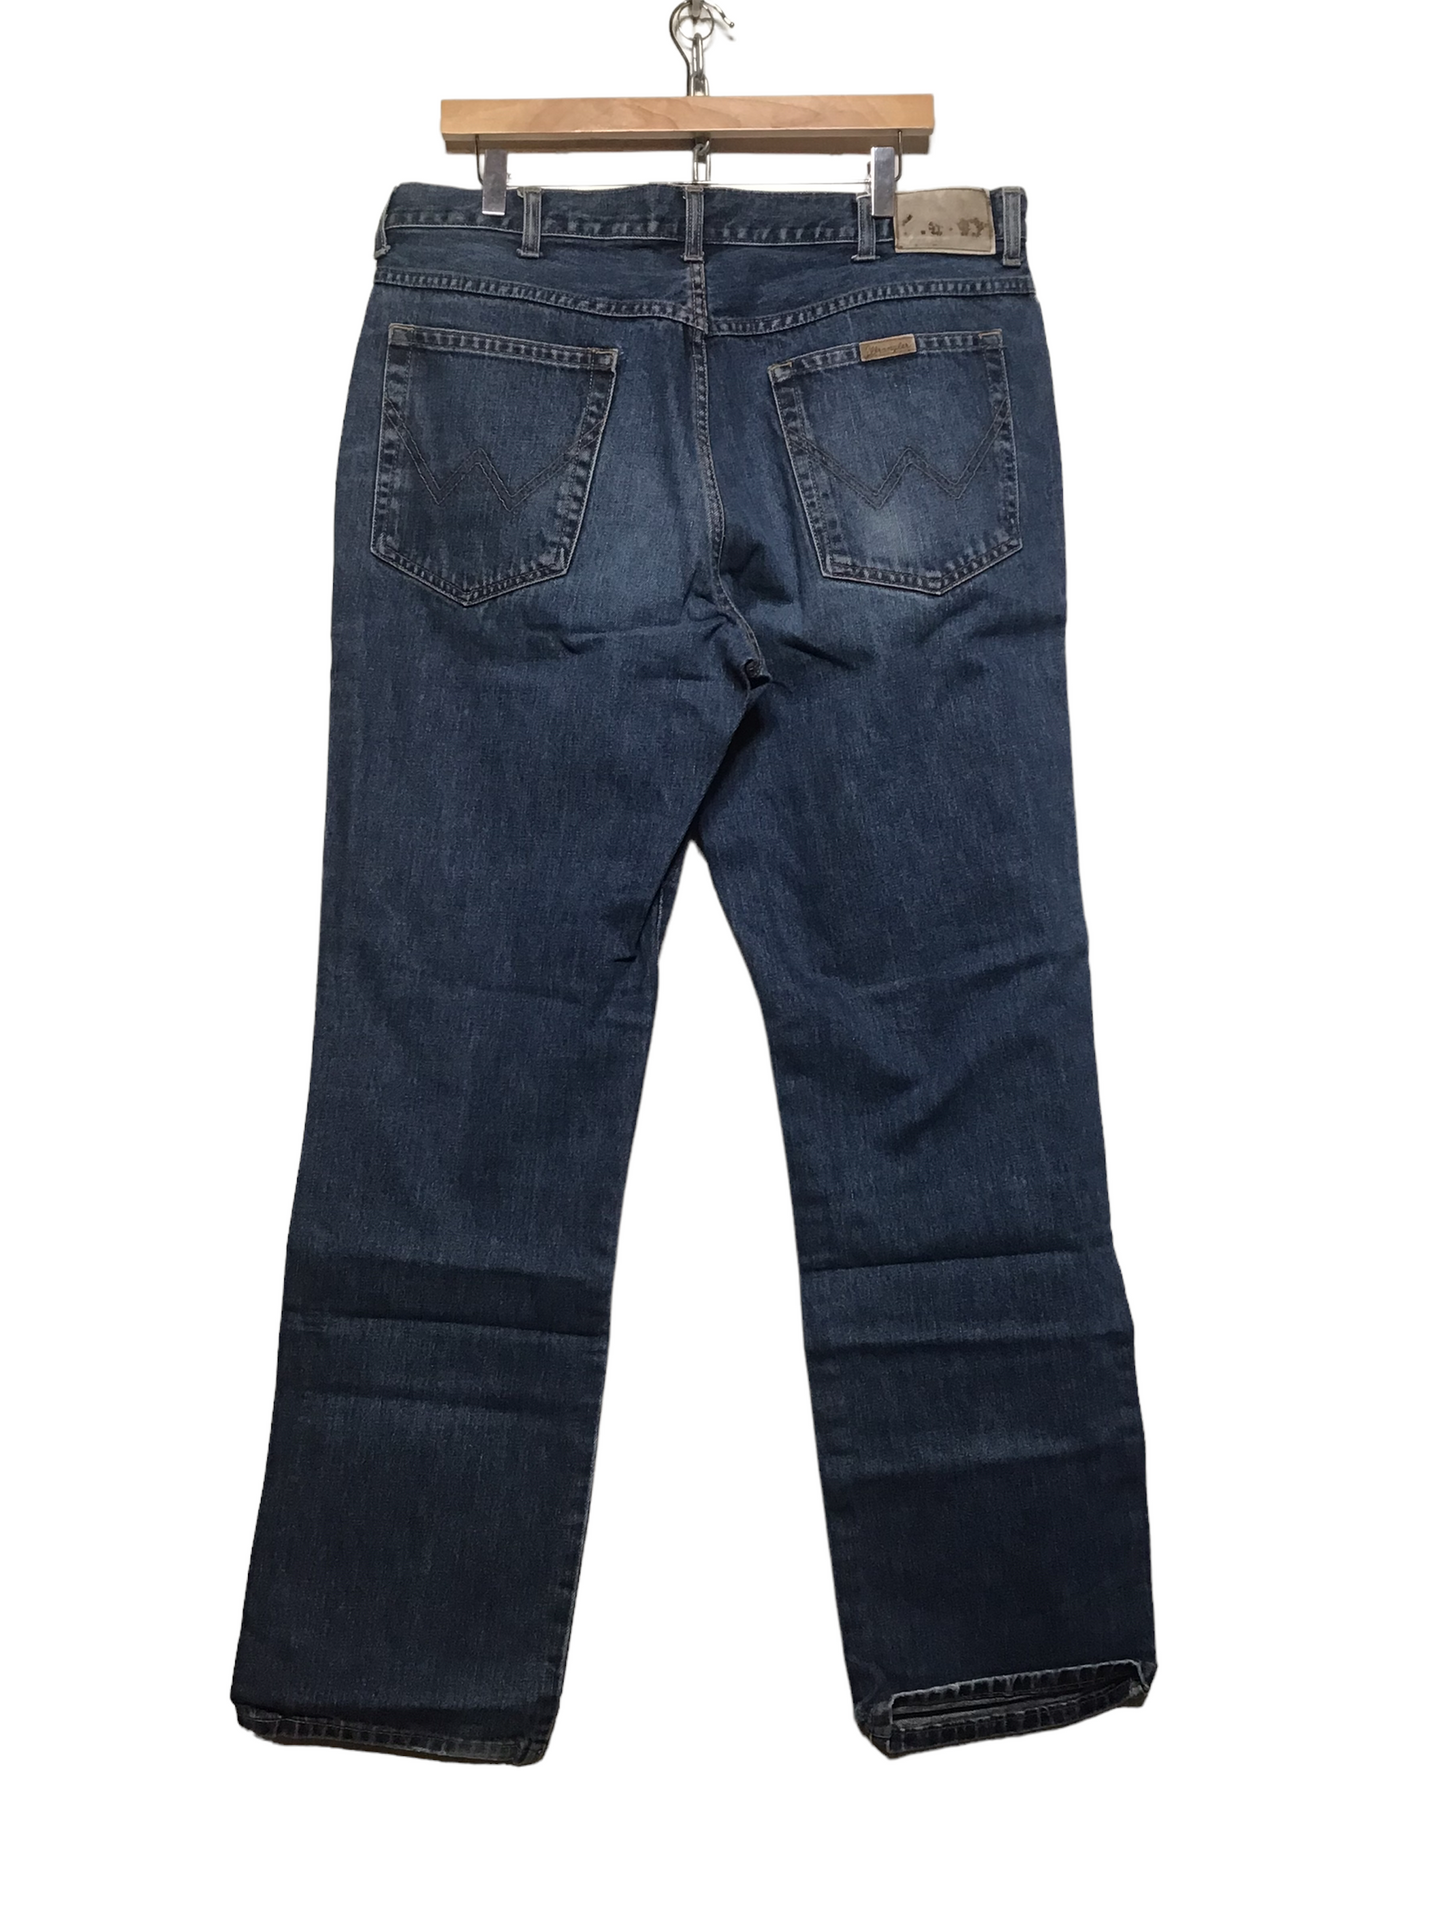 Wrangler Jeans (38X33)